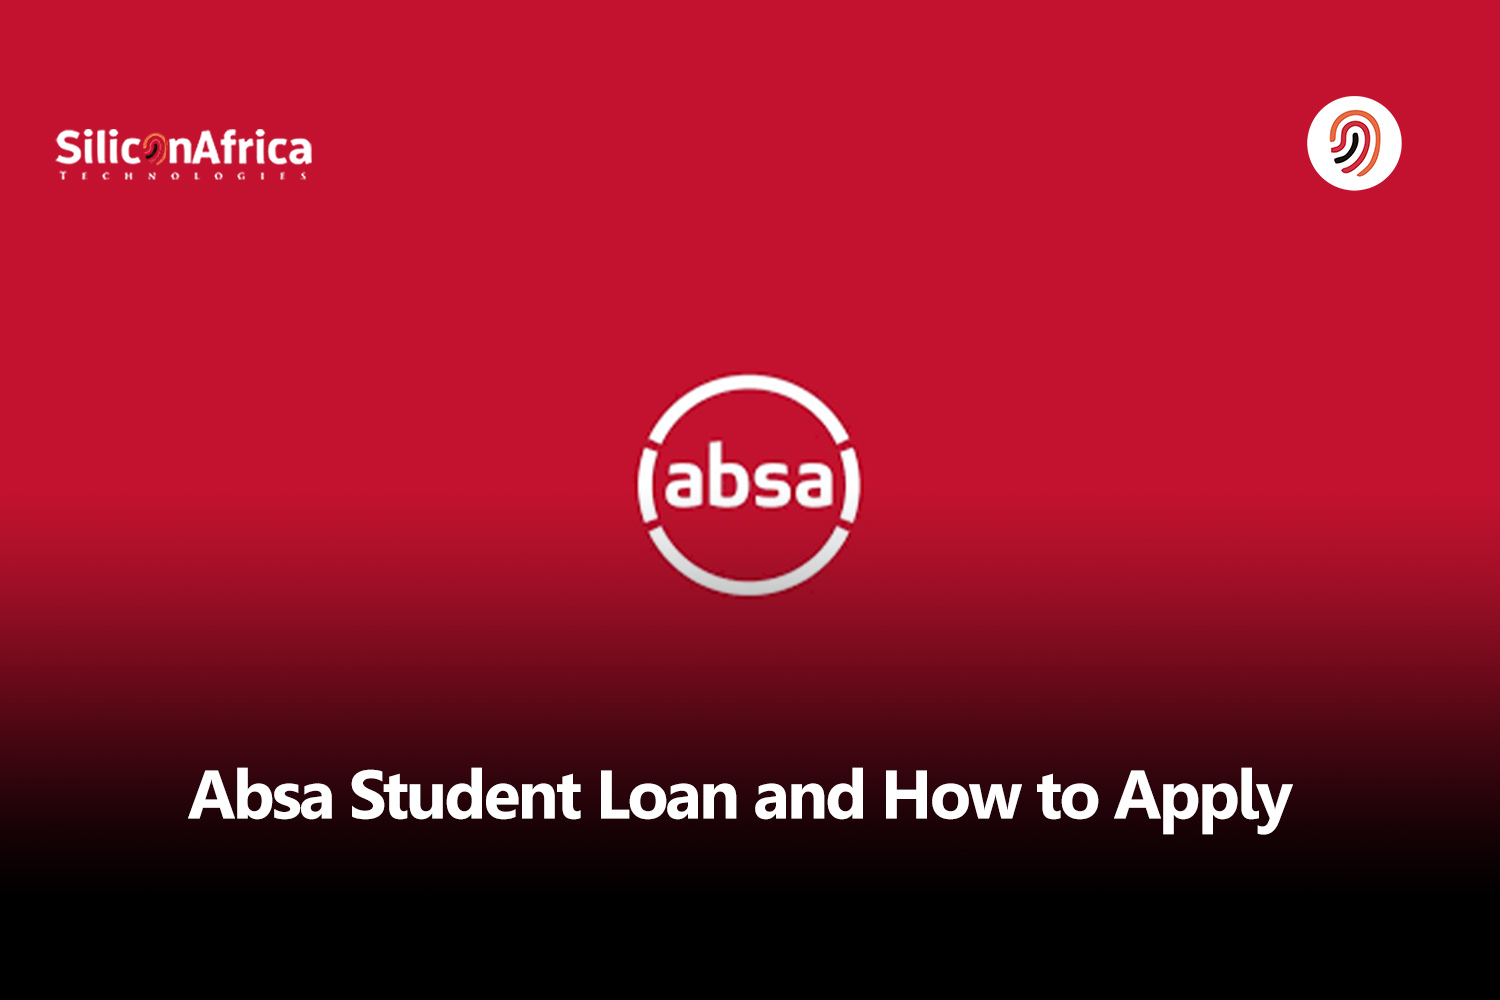 absa student loan